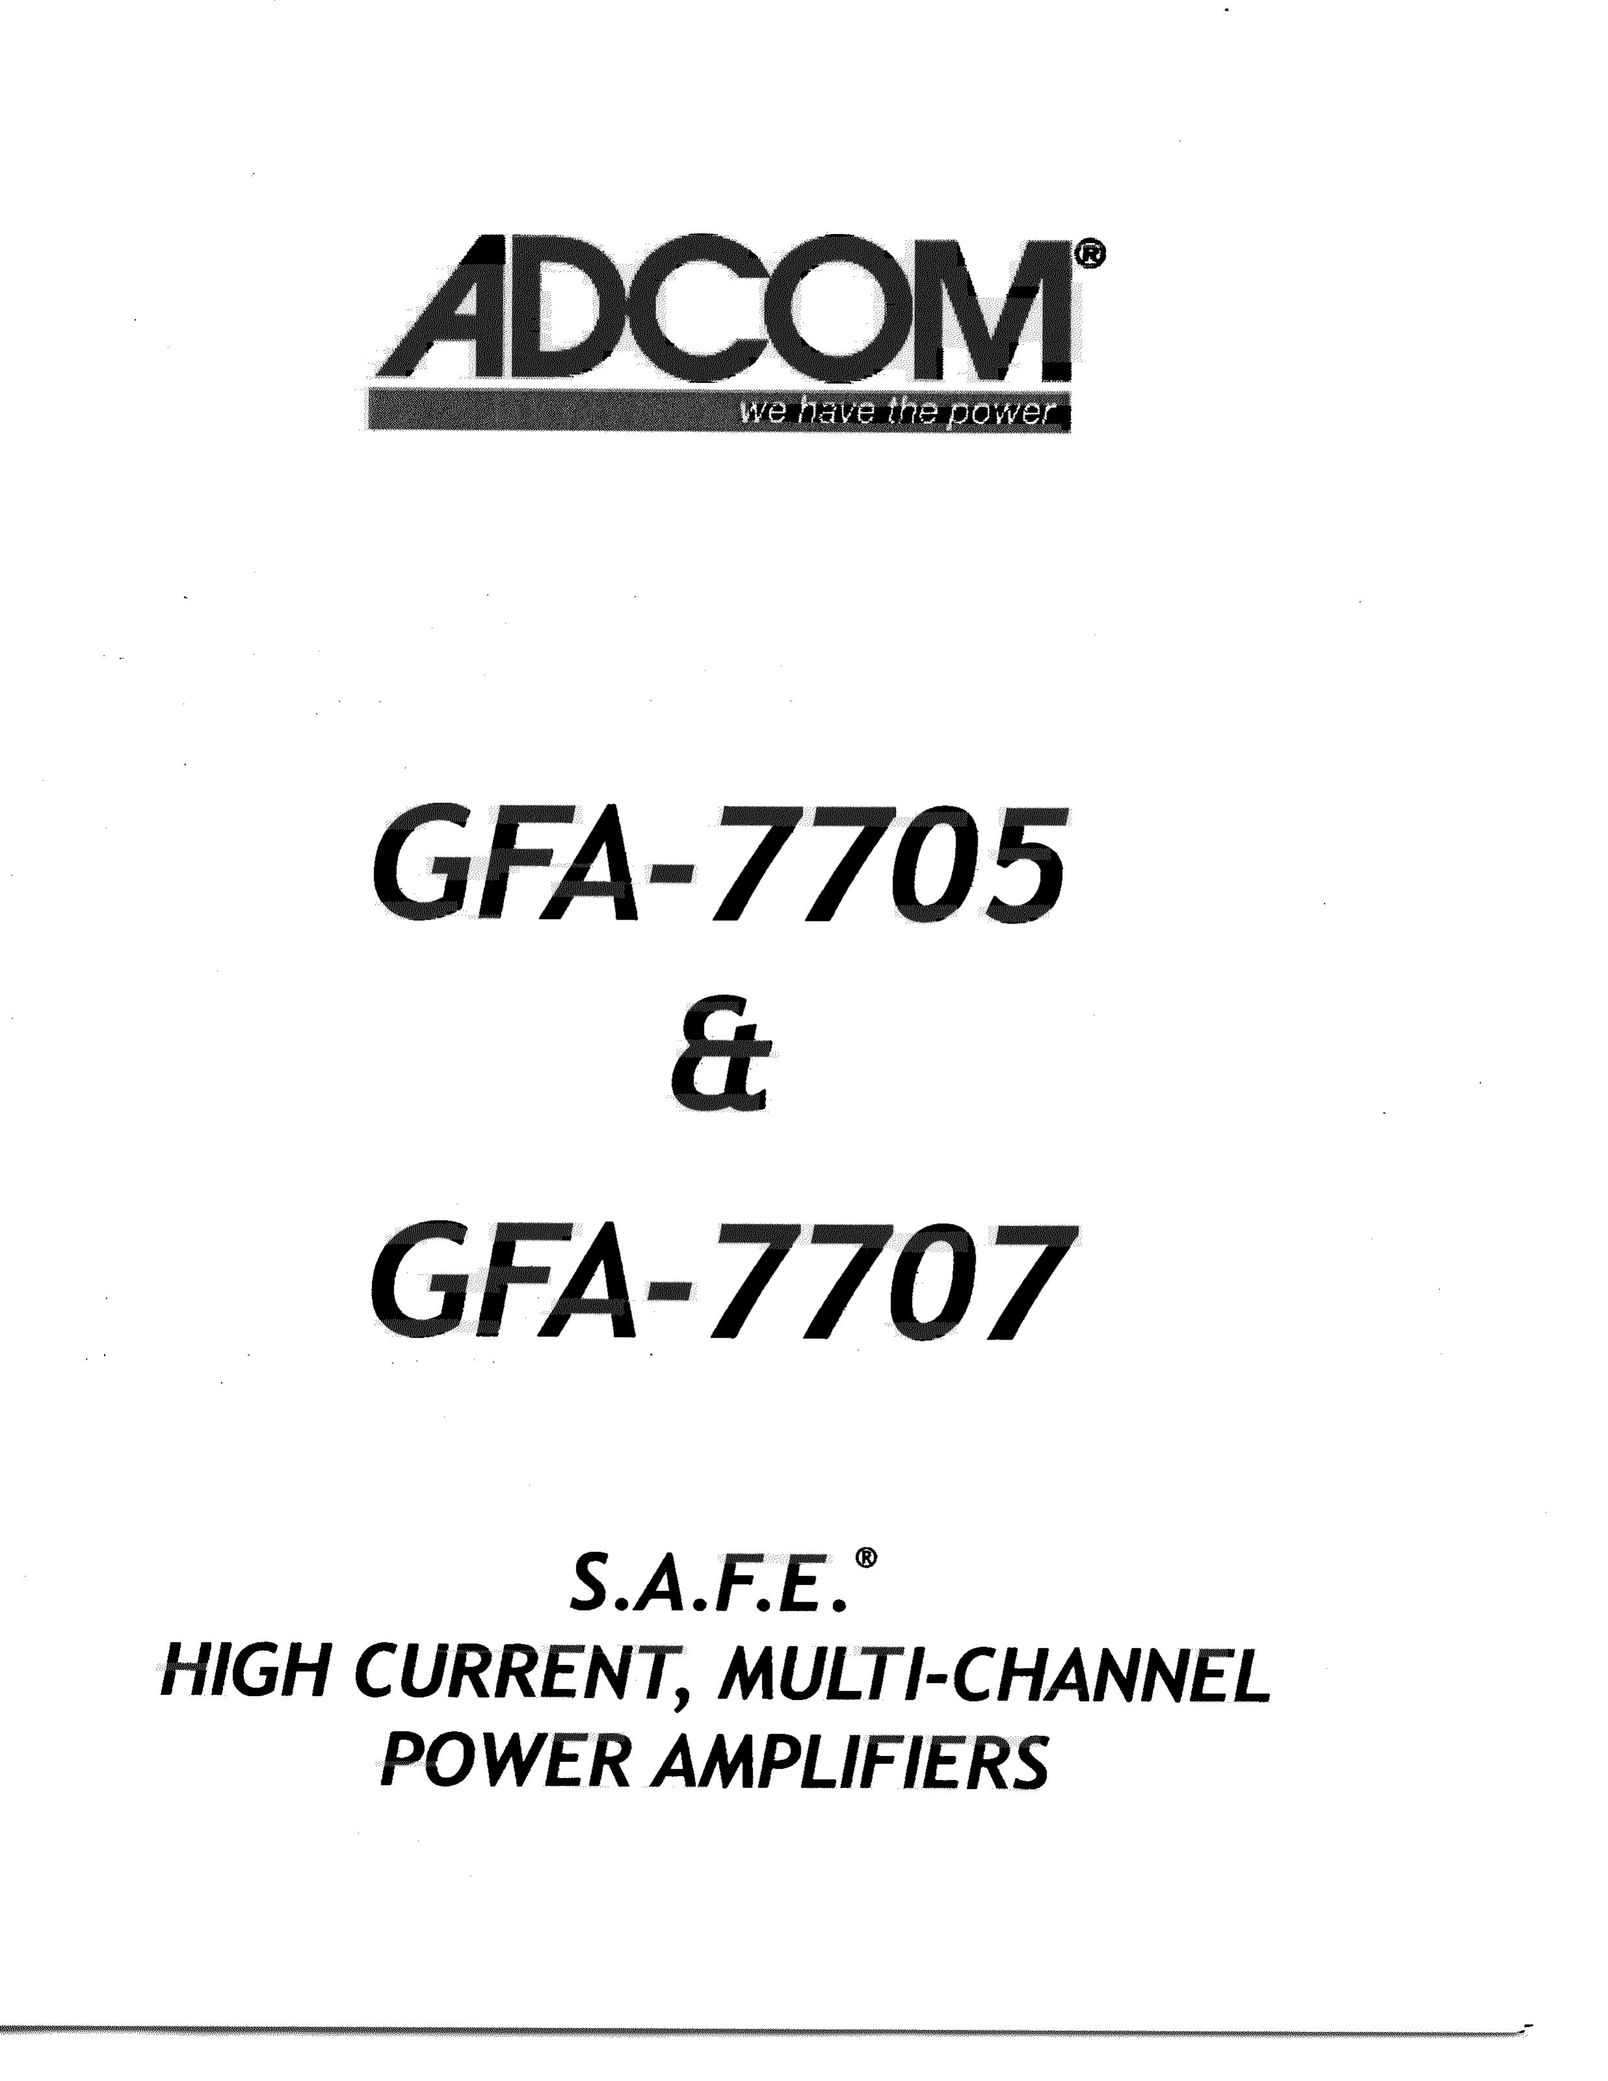 Adcom GFA-7705 Stereo Amplifier User Manual (Page 1)